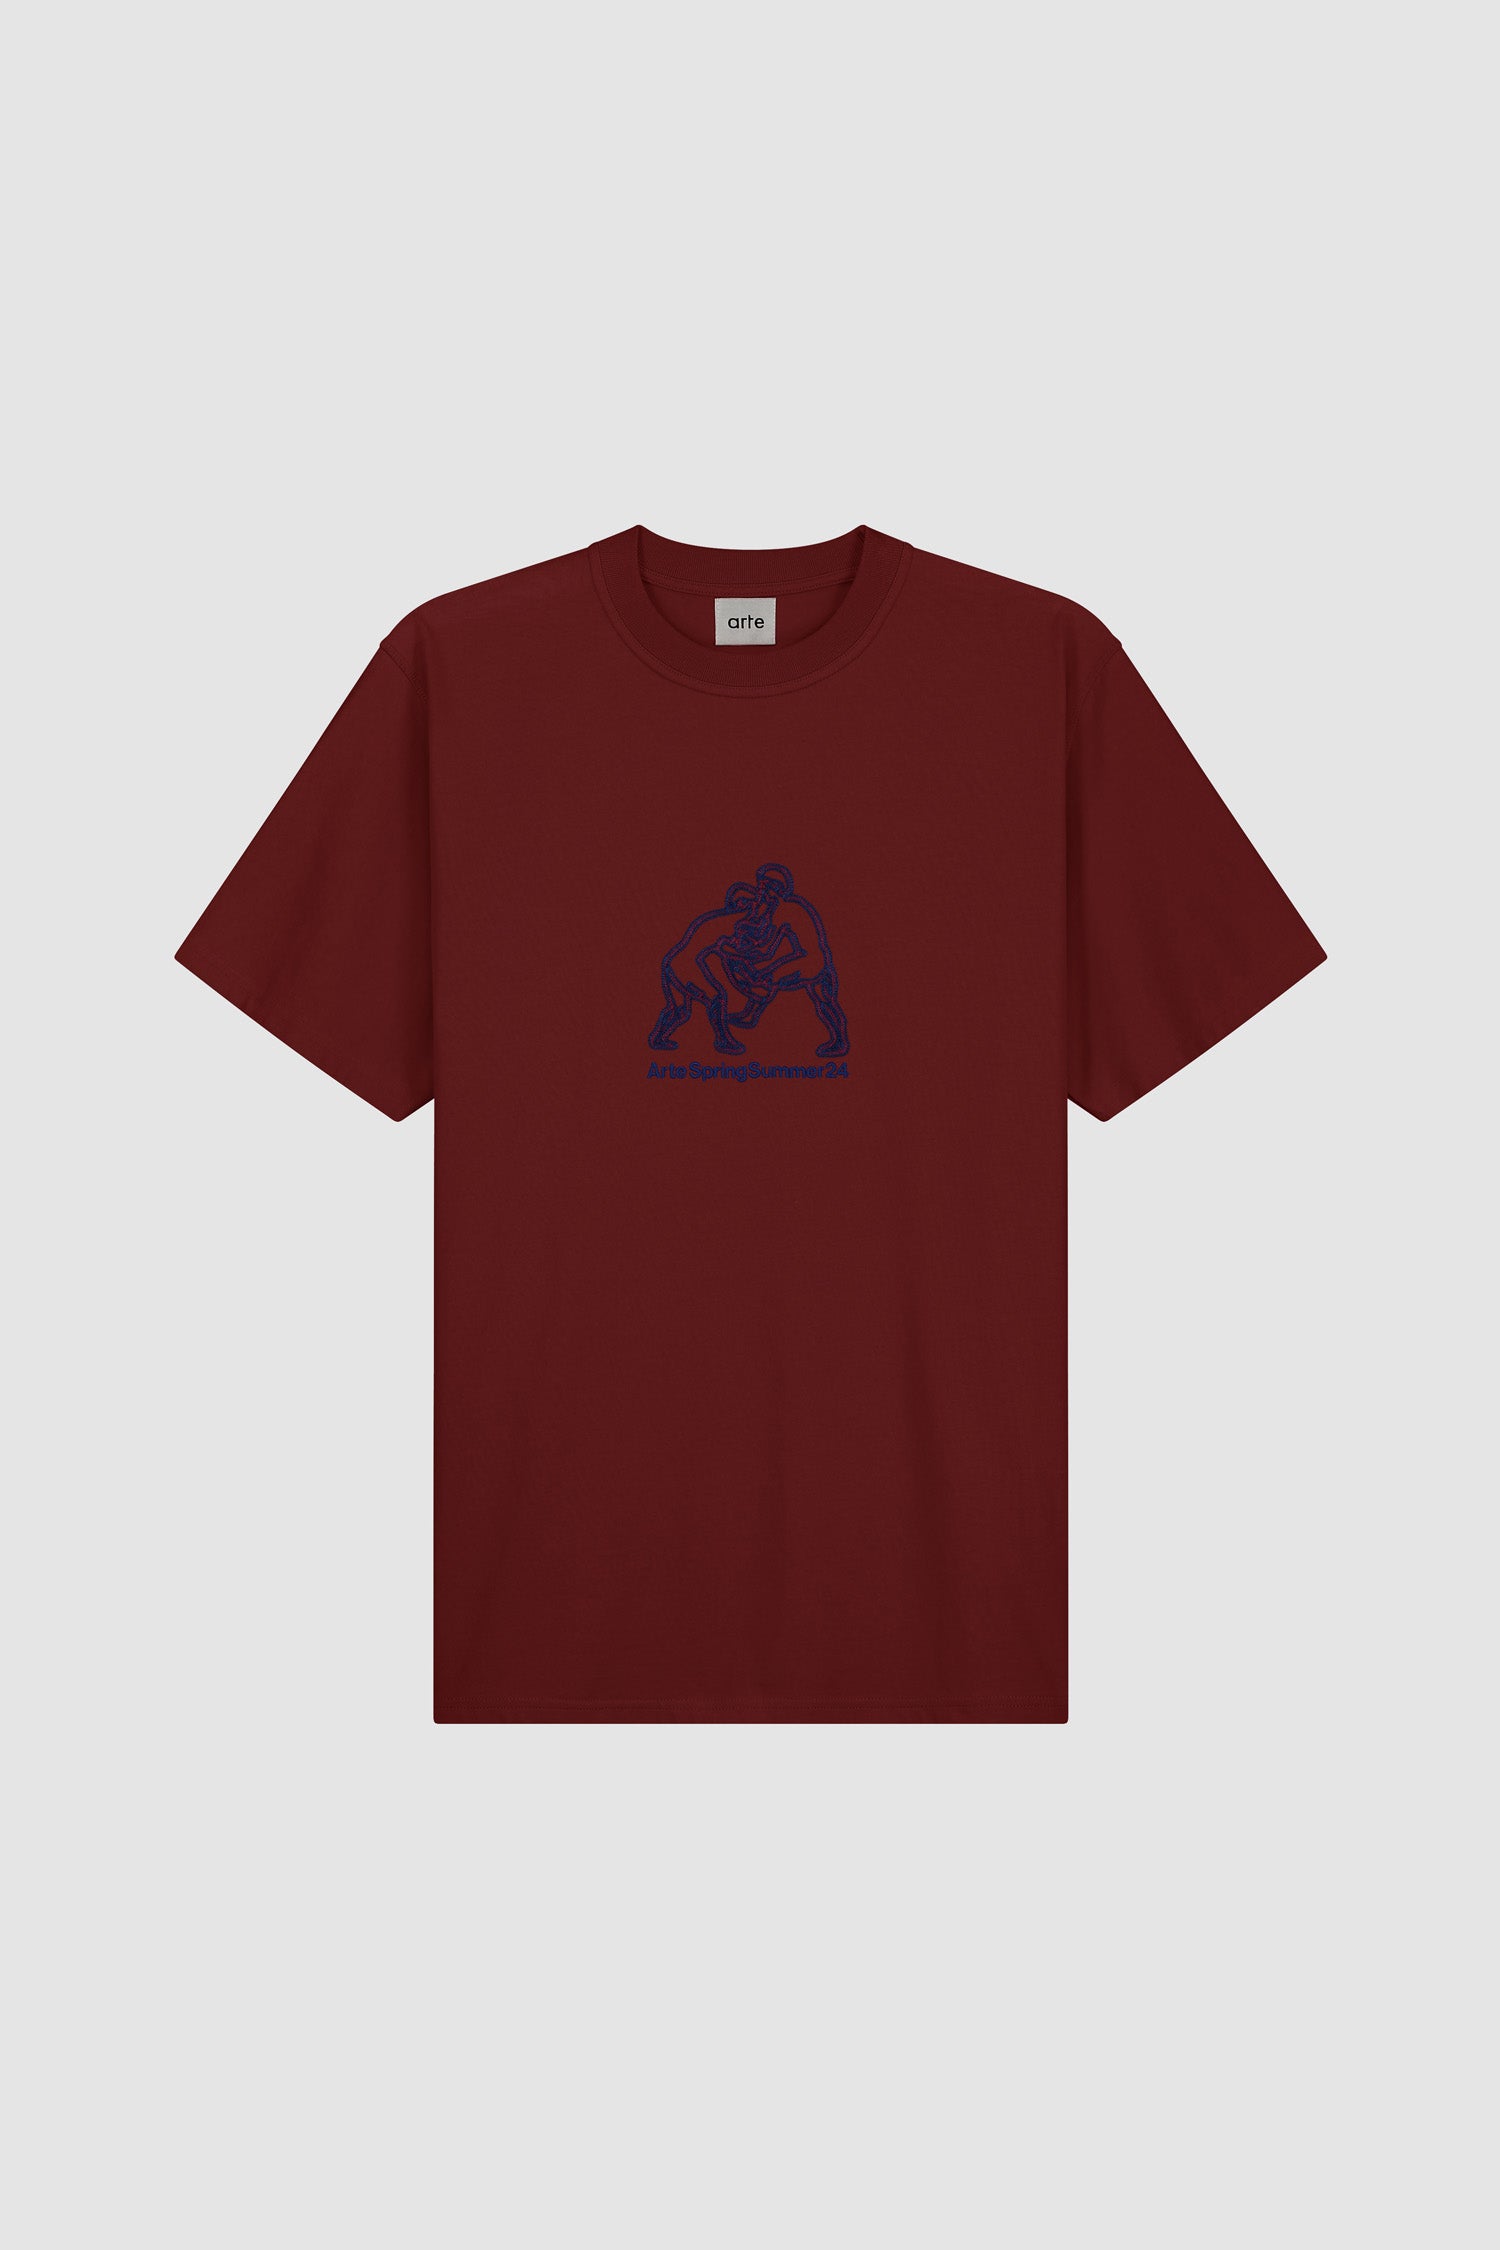 Teo Fighter Front T-shirt - Bordeaux